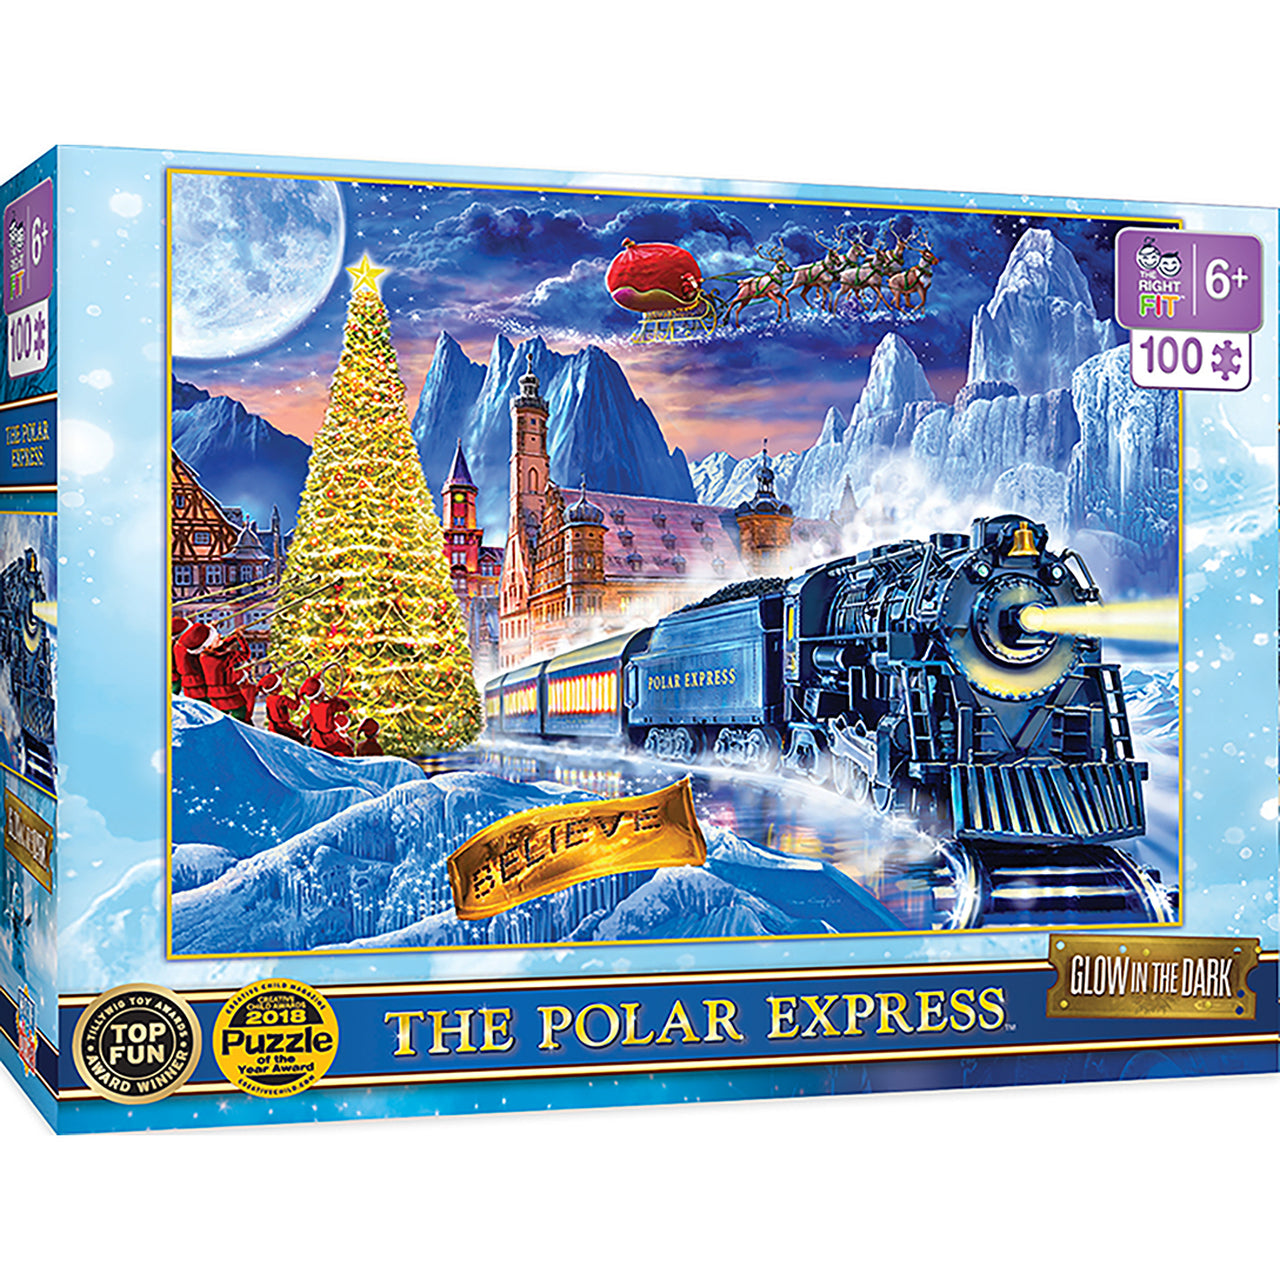 Polar Express 100 piece puzzle box